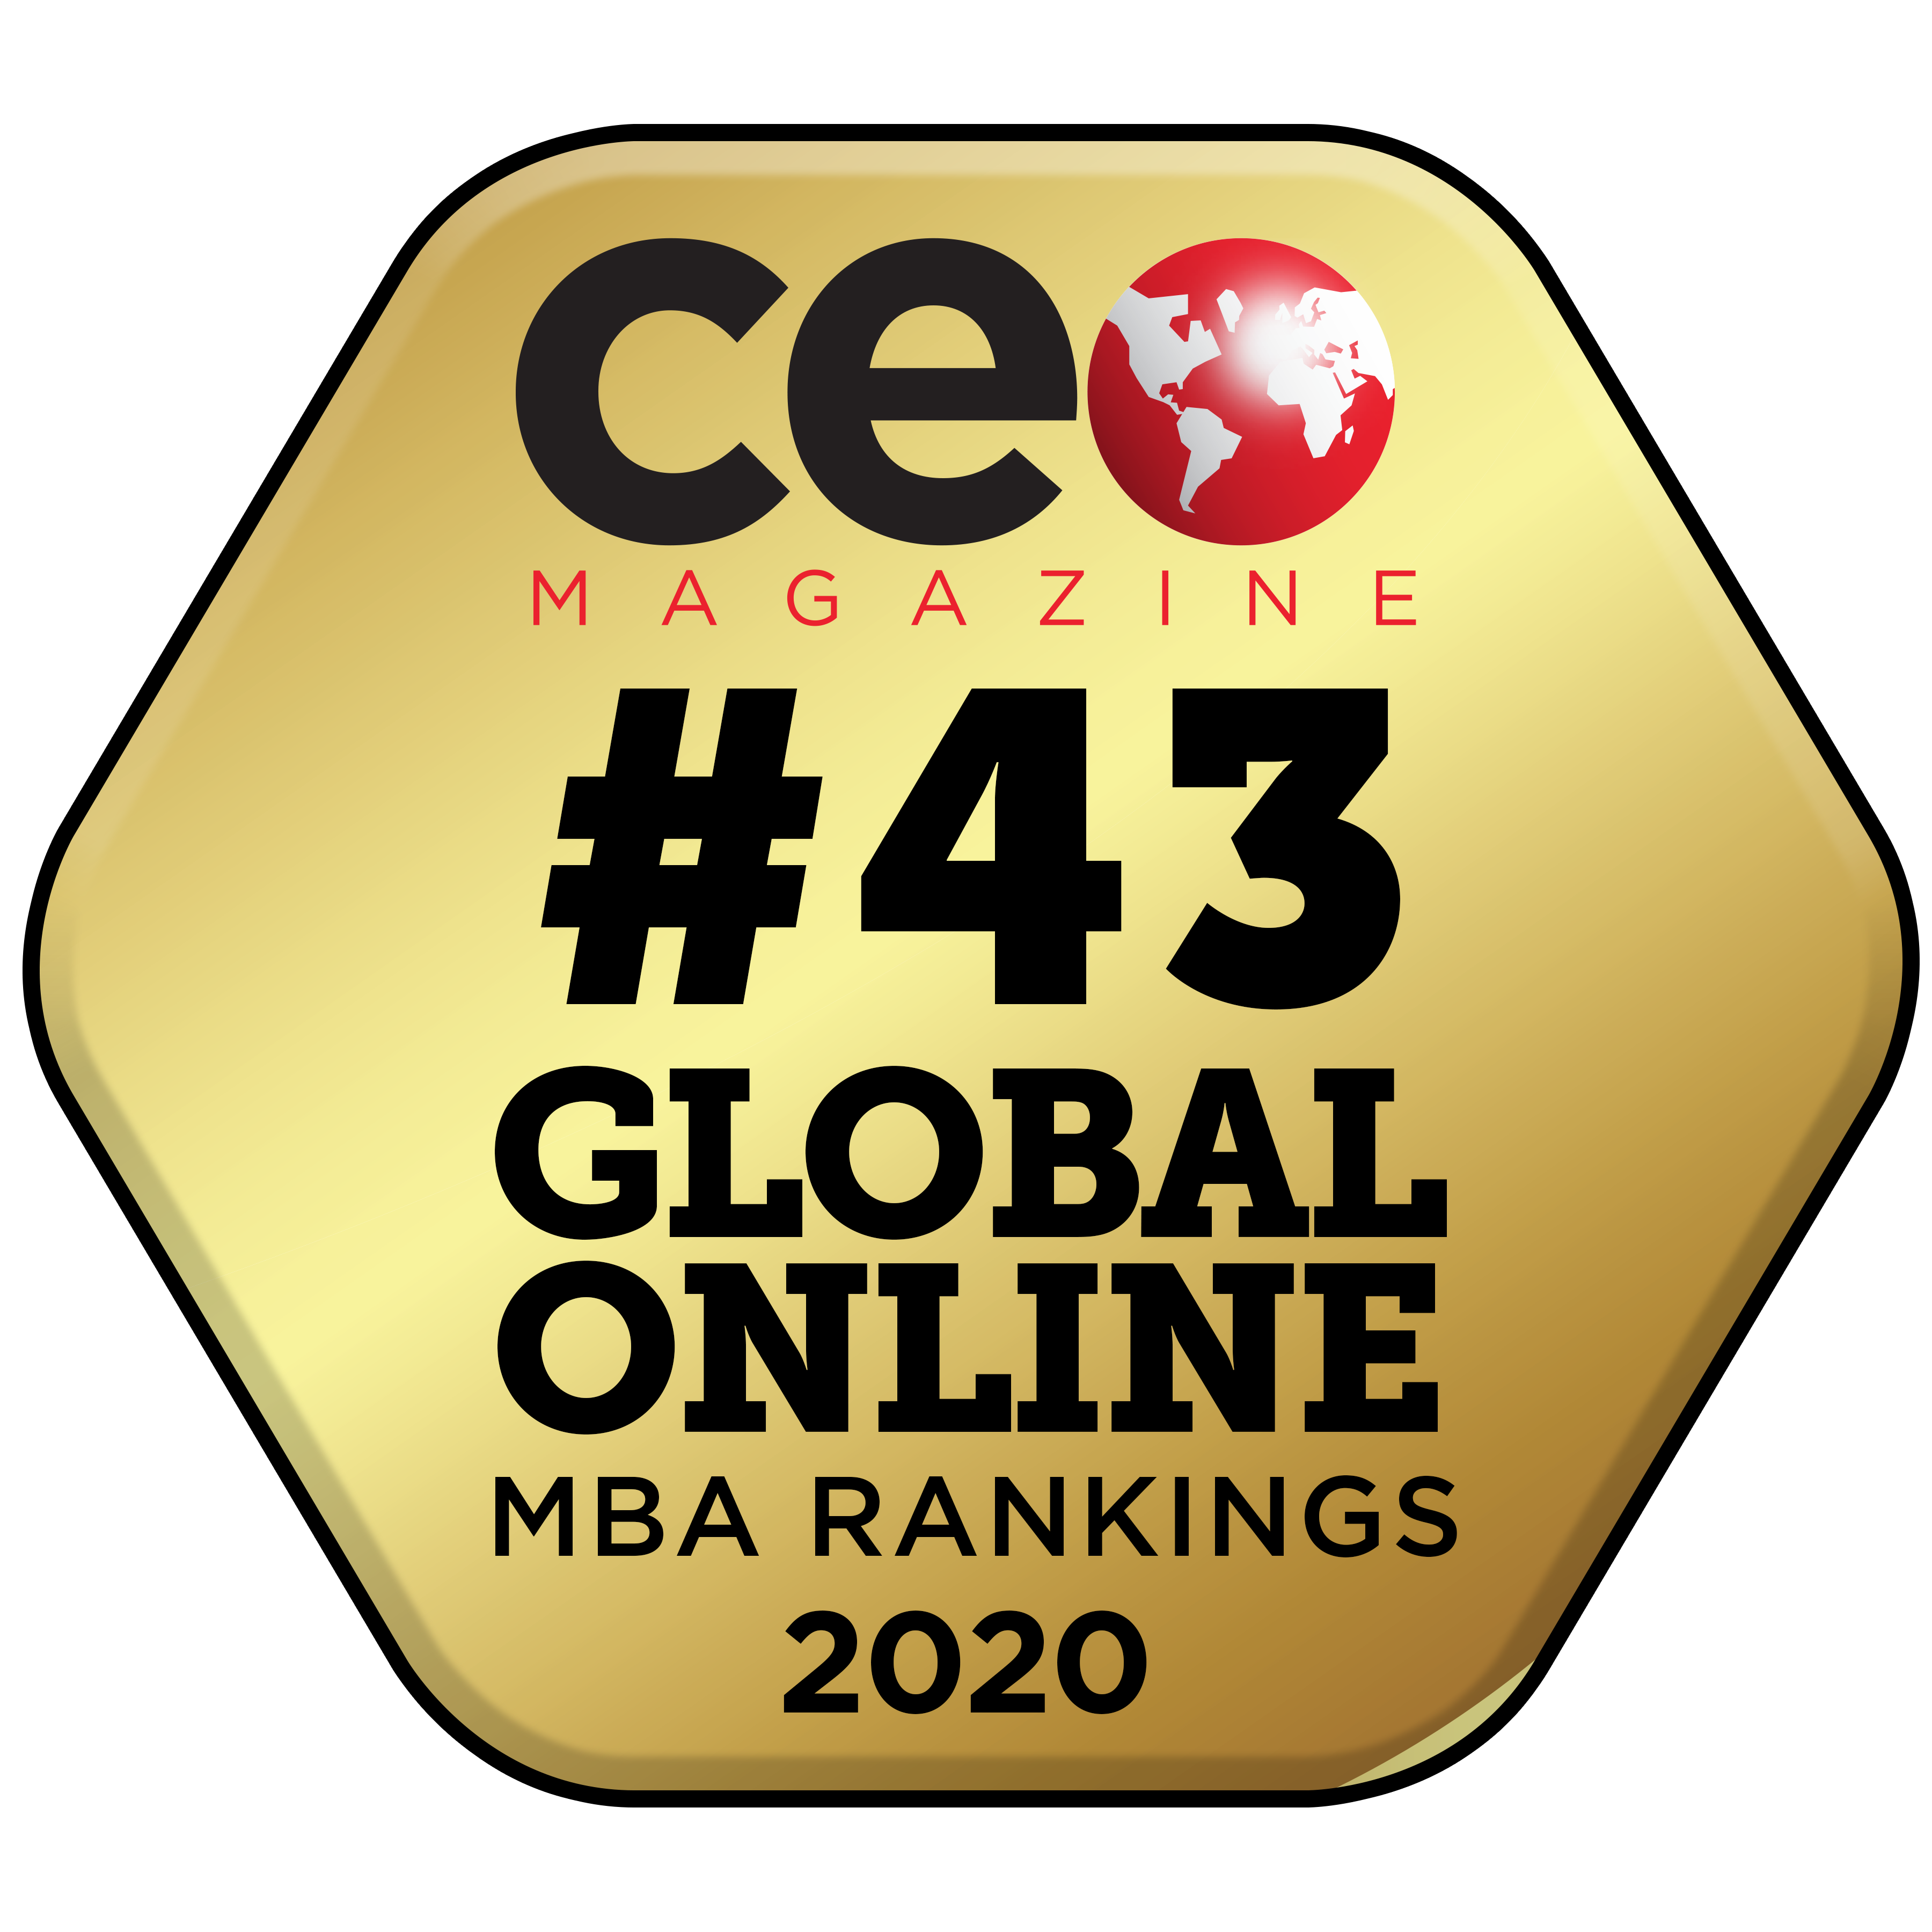 CEO Magazine 43 ranked